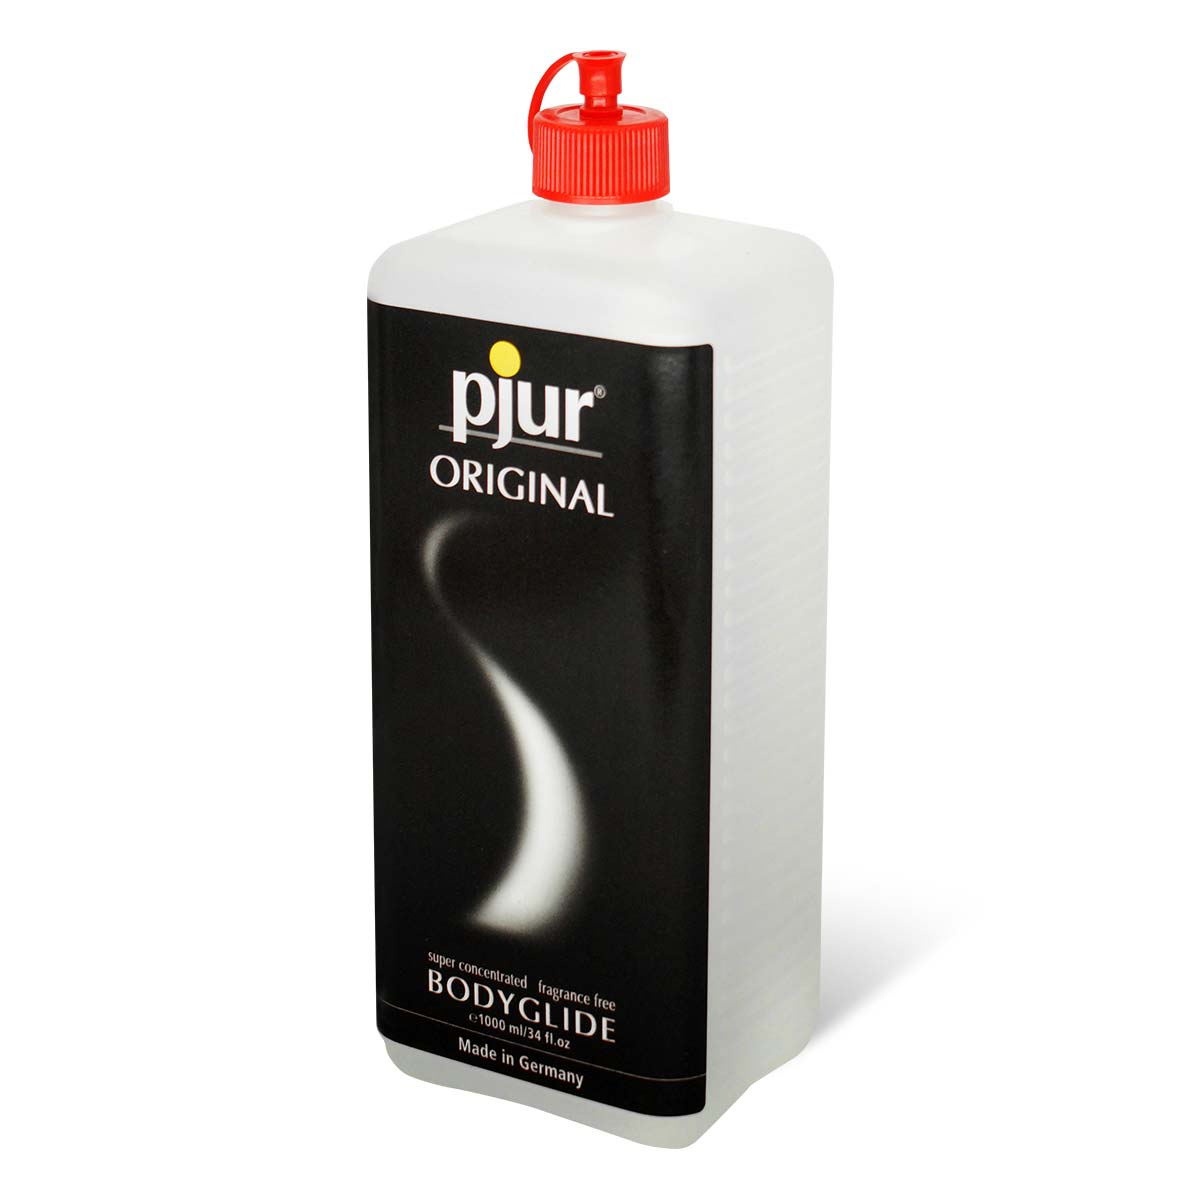 pjur ORIGINAL 1000ml Silicone-based Lubricant-thumb_1